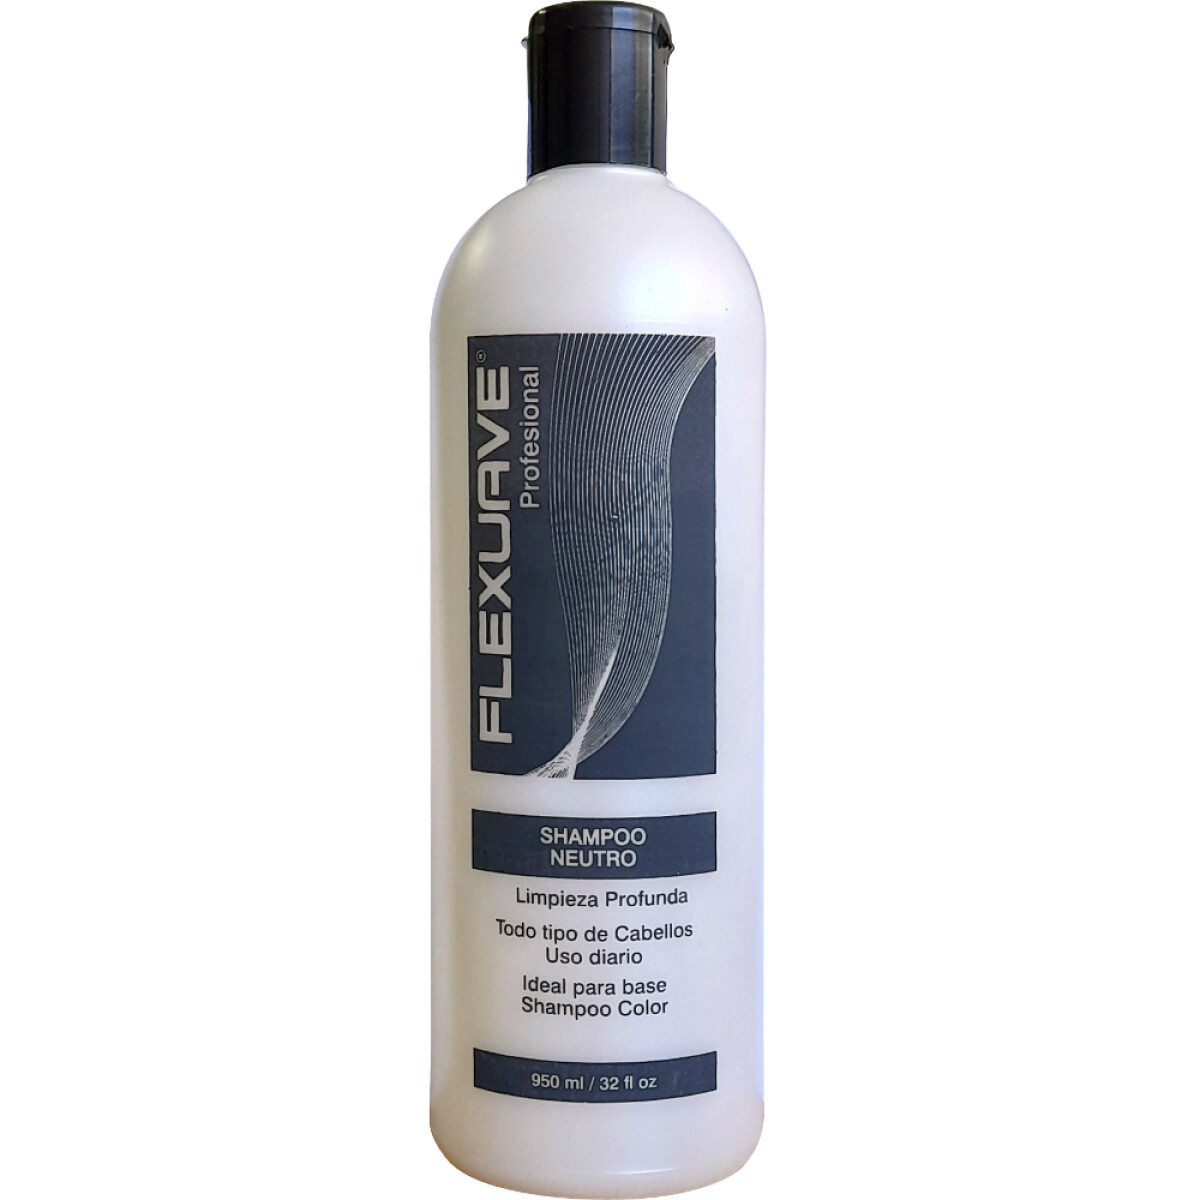 Shampoo Neutro FLEXUAVE Profesional - 1 L 